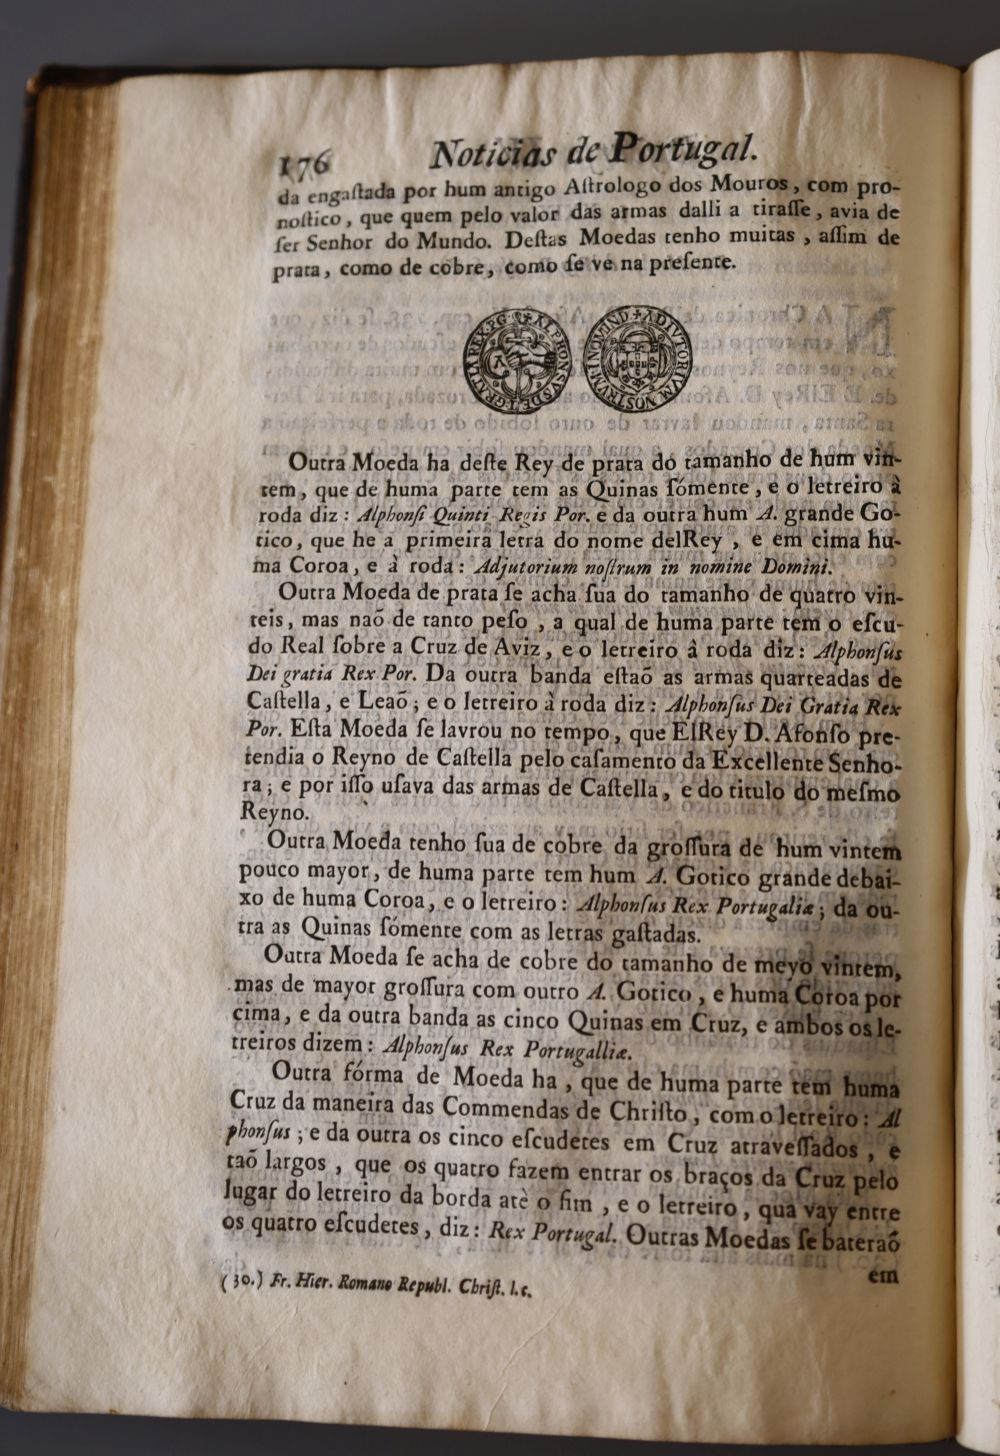 Faria, Manoel Severim de, 1583-1655 - Noticias de Portugal, 2nd edition, calf, quarto, pencil writings to obverse of half title, later